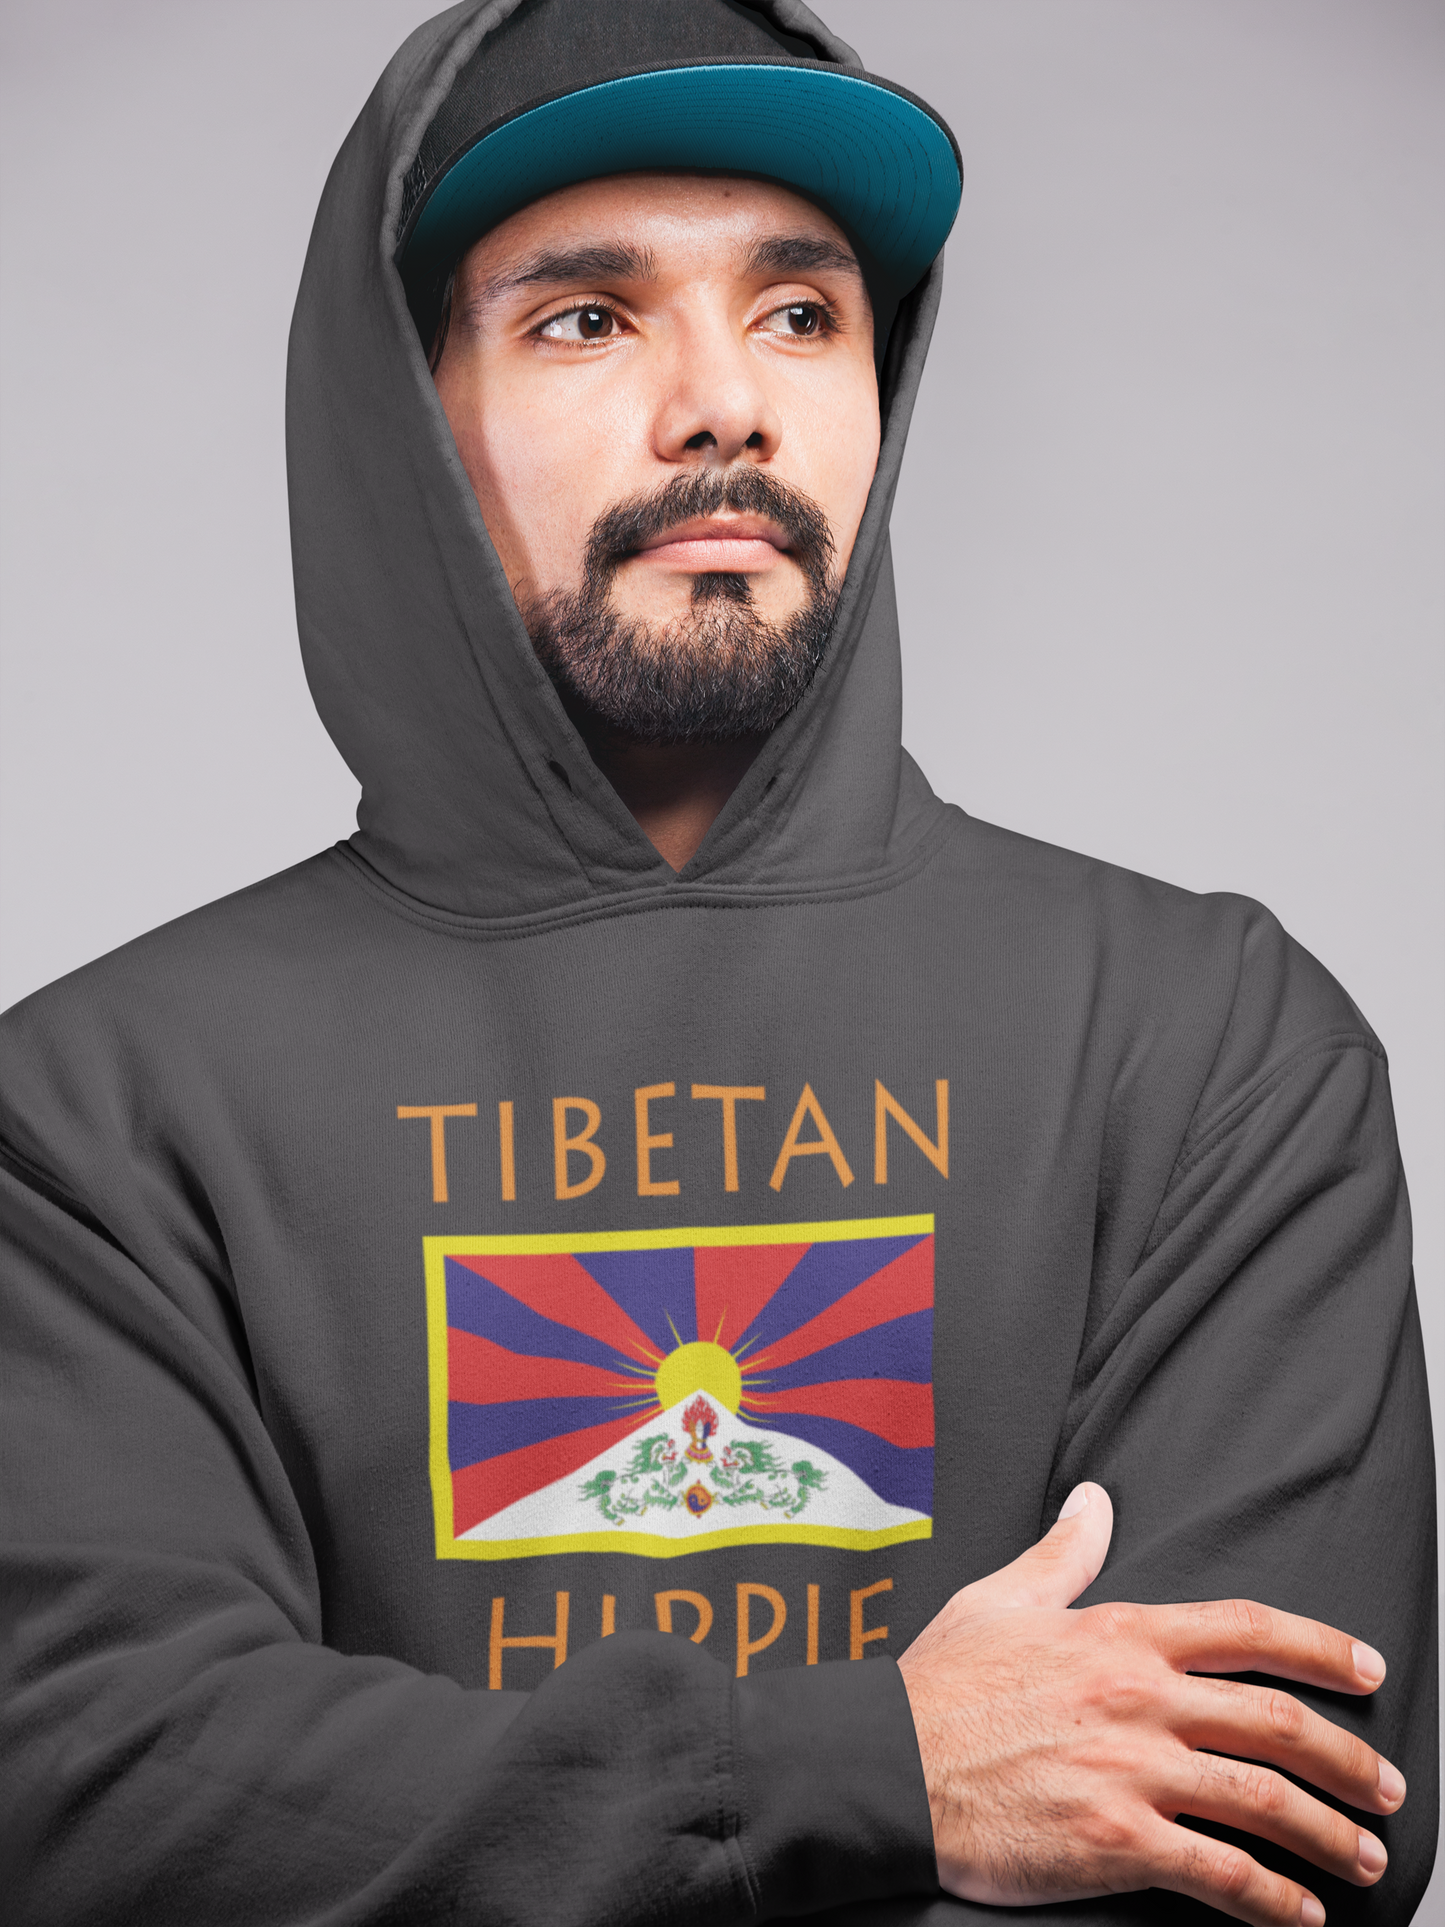 Tibetan Flag Hippie™ Unisex Hoodie